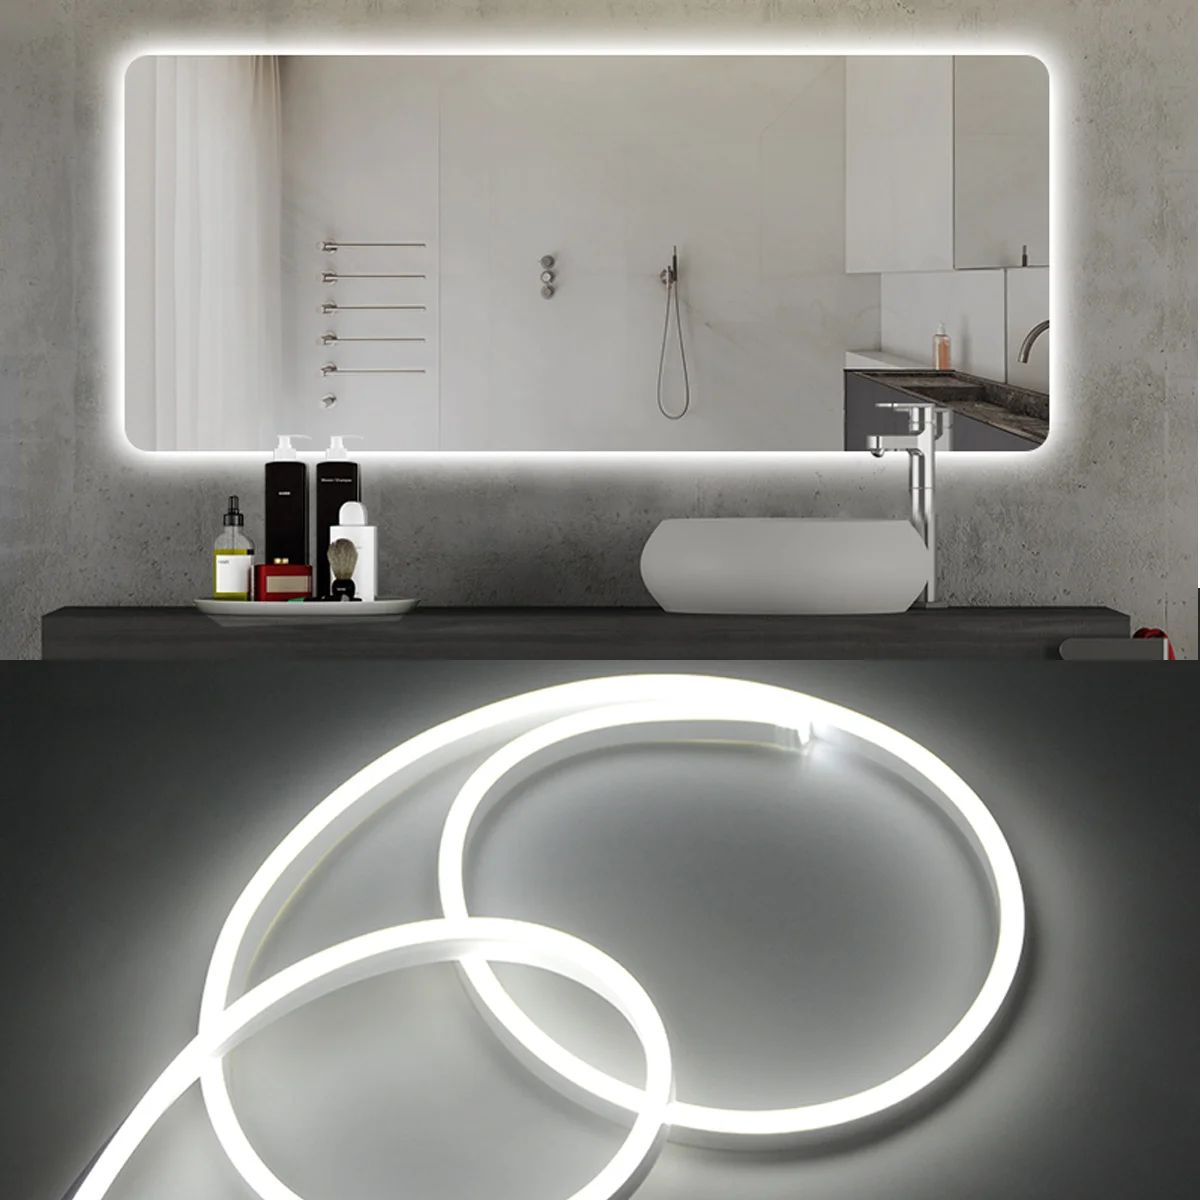 Фото LED 12V Makeup Neon Strip Backlight Mirror Light Vanity Dimmable Control Wall Lamp For Dressing Table Home Decor | Лампы и освещение